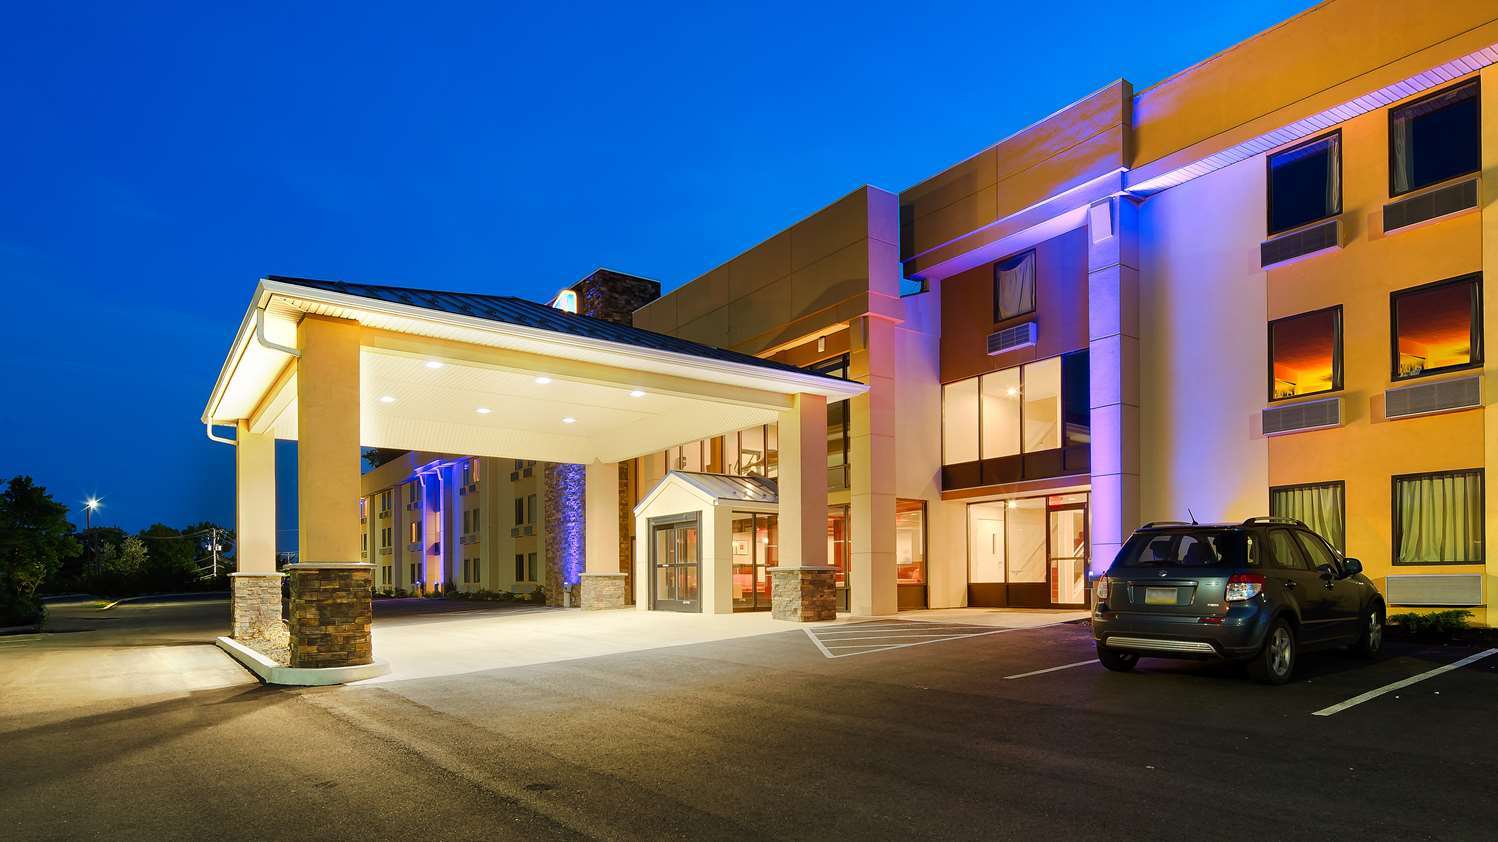 Photo of Best Western Plus Poconos Hotel, Tannersville, PA